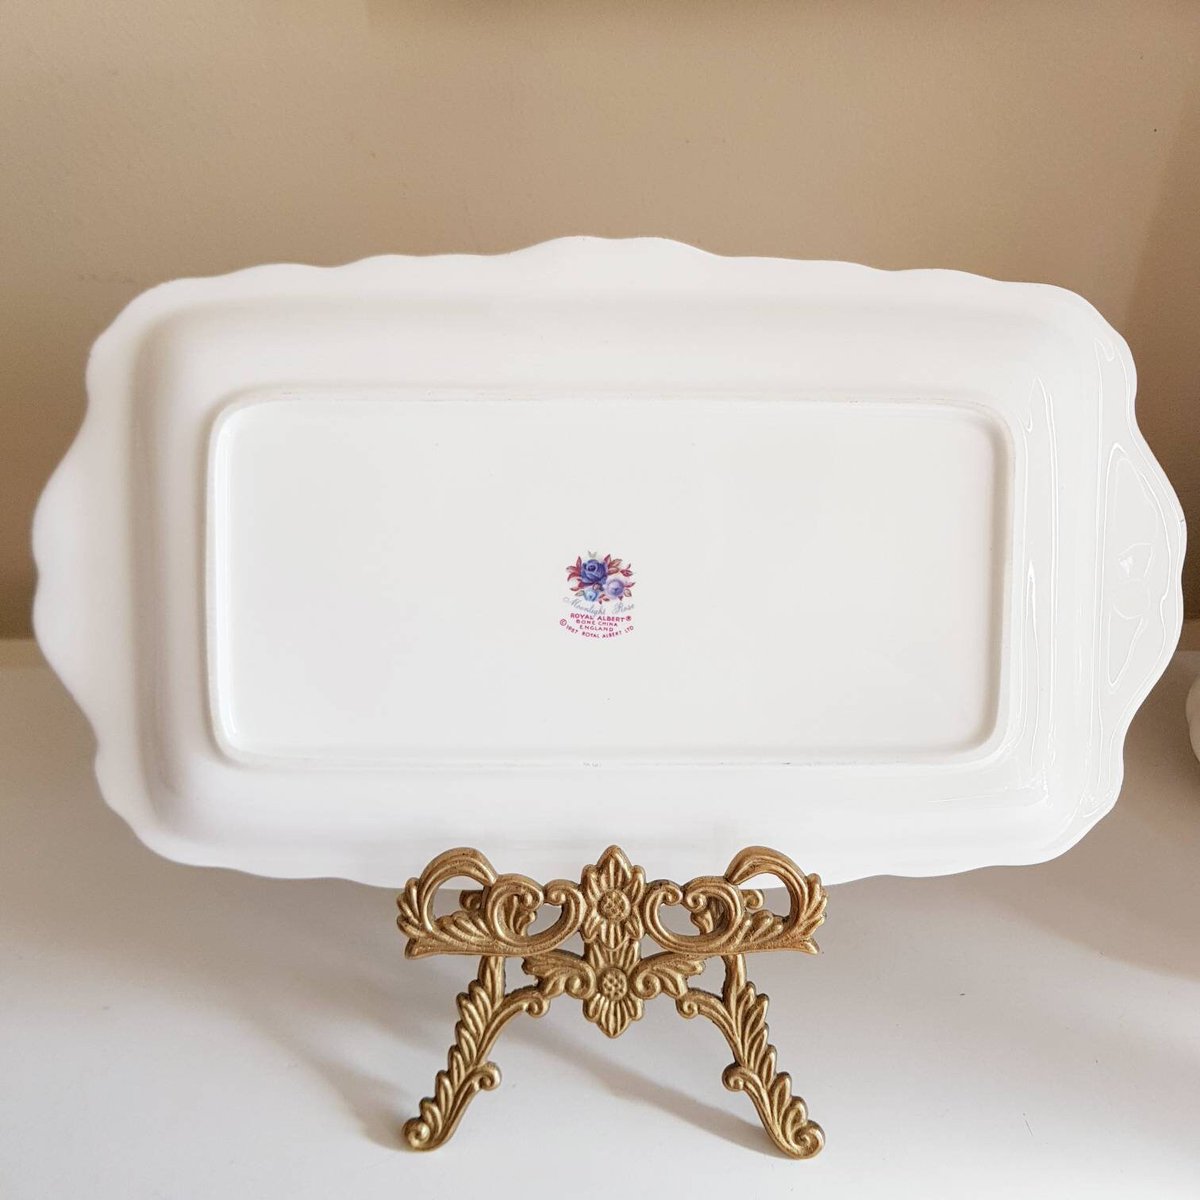 #ServingPlate #RoyalAlbert Original Royal Albert, Moonlight Rose, Bone China Porcelain, Plate Blue Roses, Made in England, Sandwich Plate, LTD 1987
etsy.me/3F17XPZ